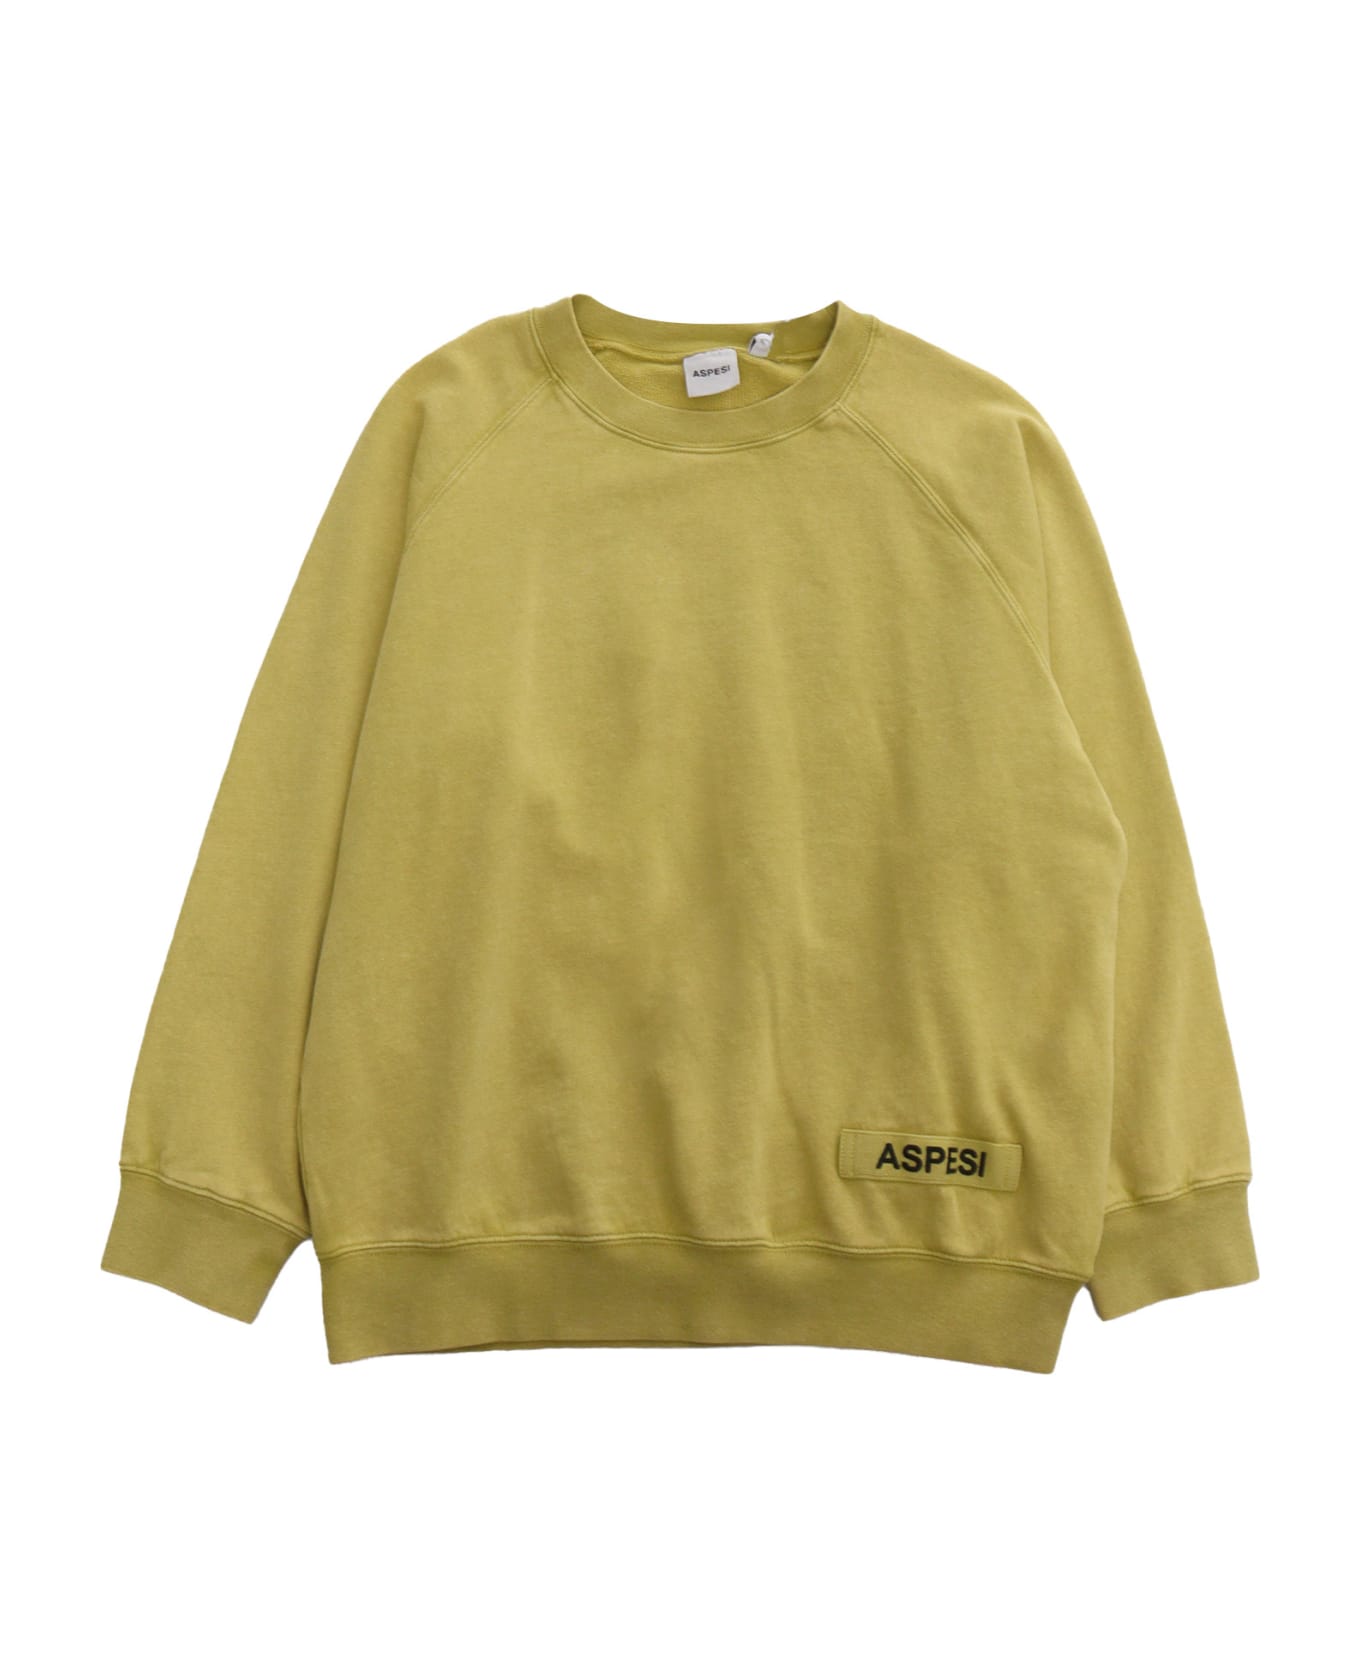 Aspesi Mustard Colored Sweatshirt - GREEN